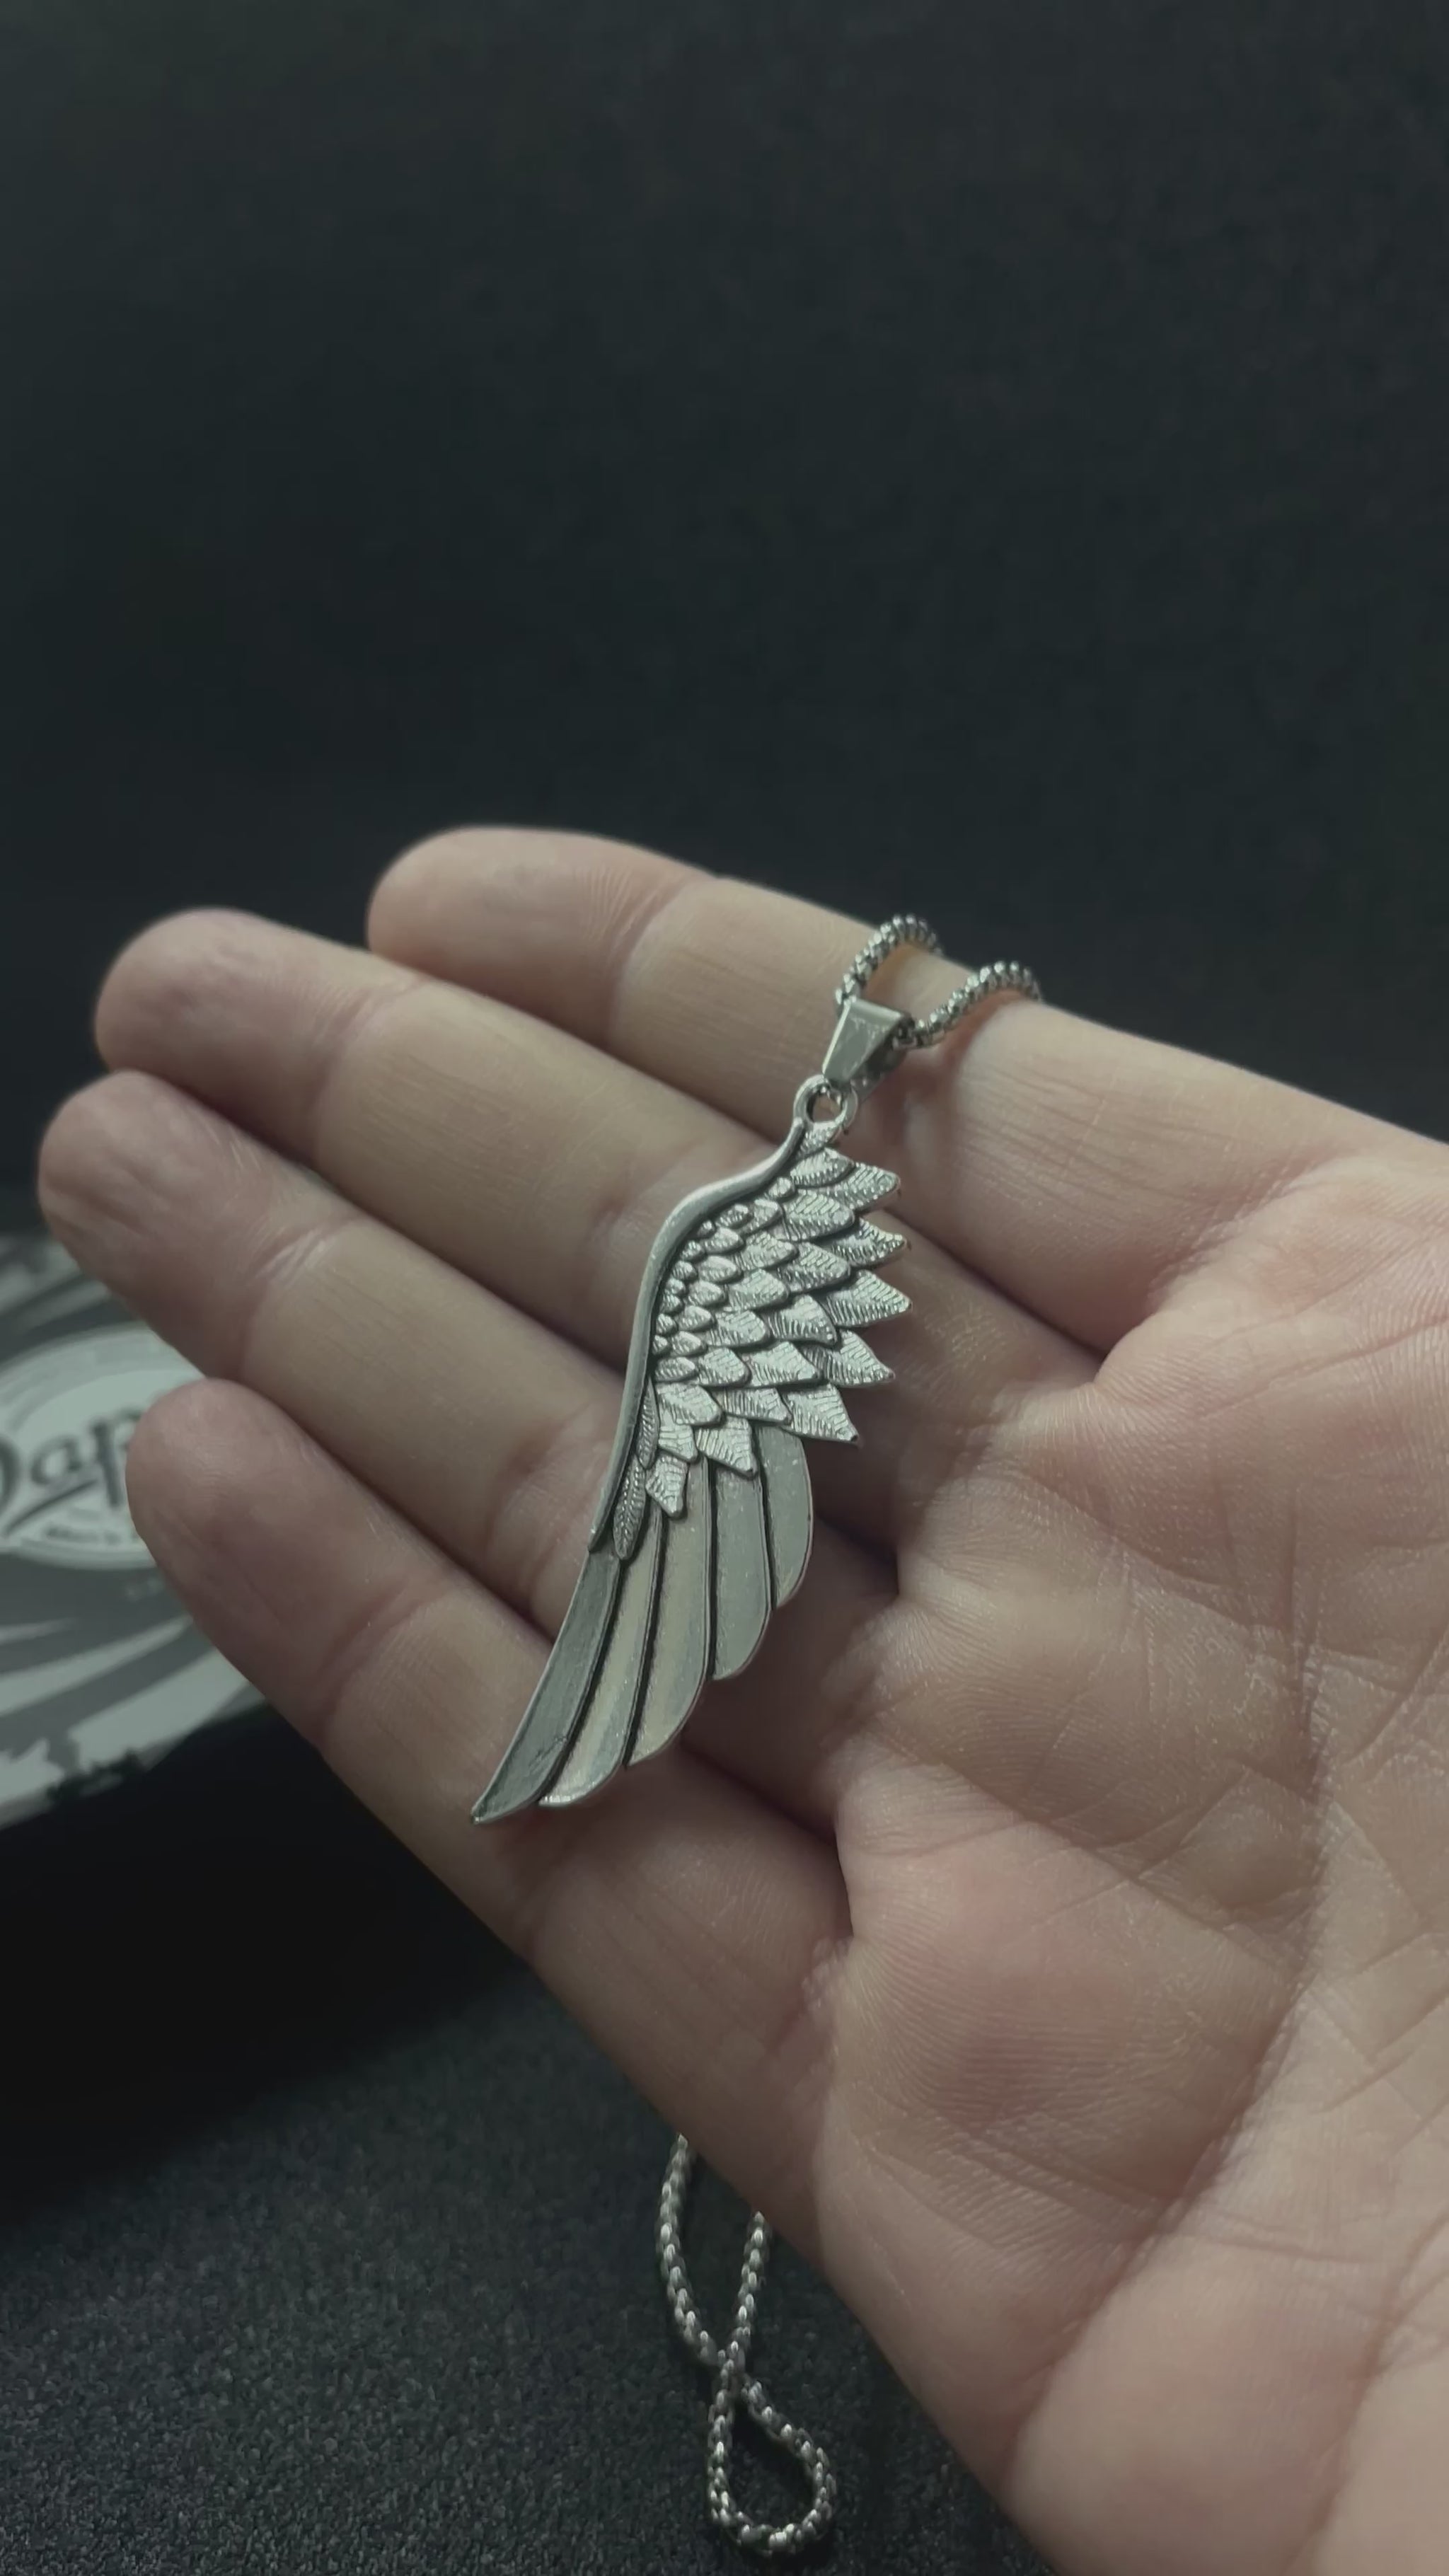 Antique Silver Wings Pendant necklace for men Women In Pakistan